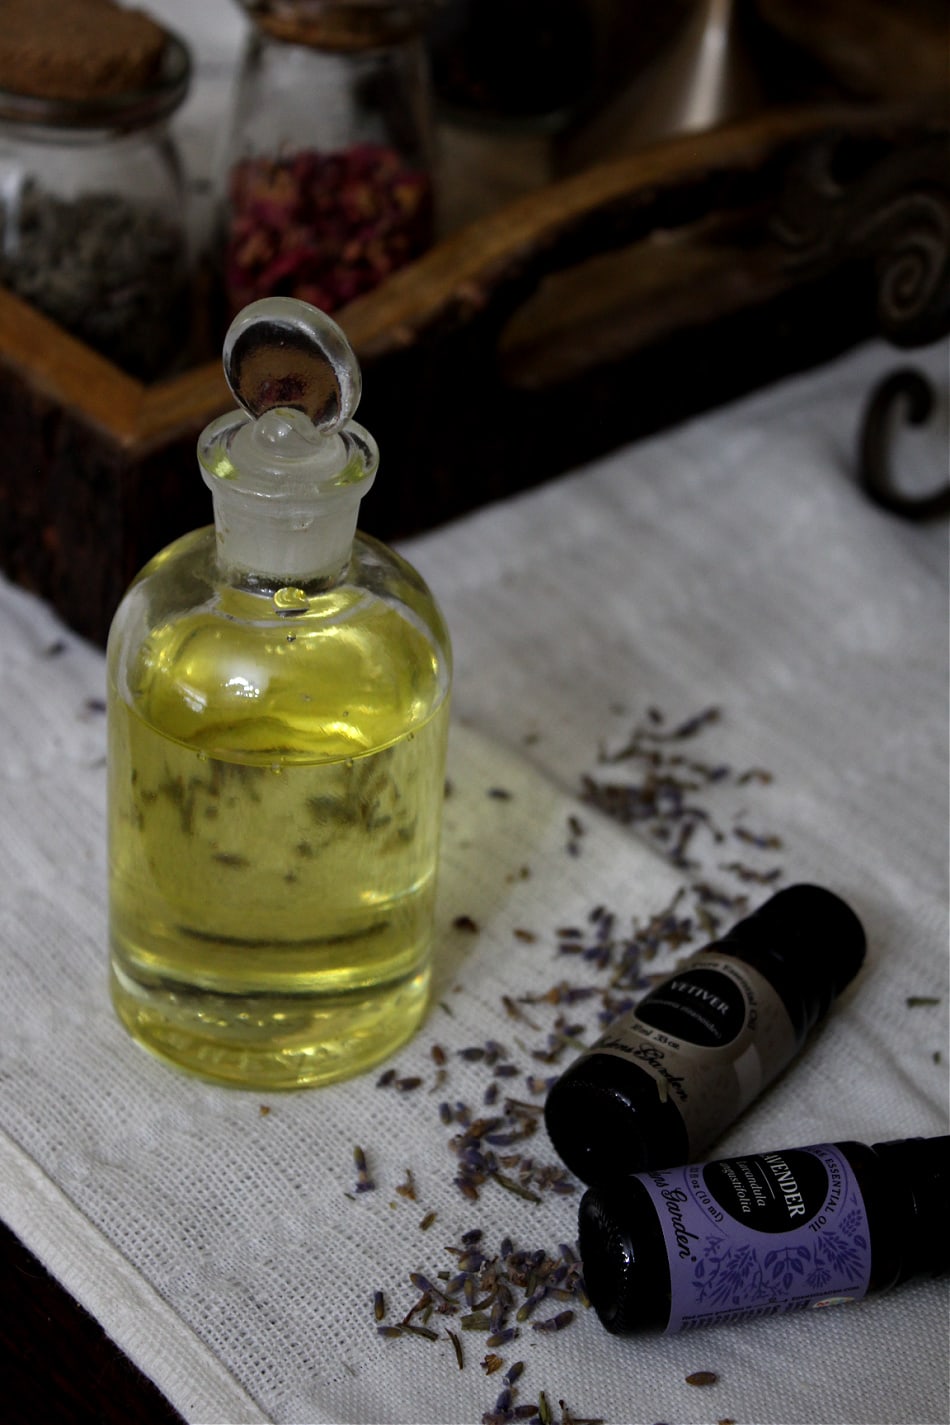 massage oil, essential oil bottles, lavender flowers